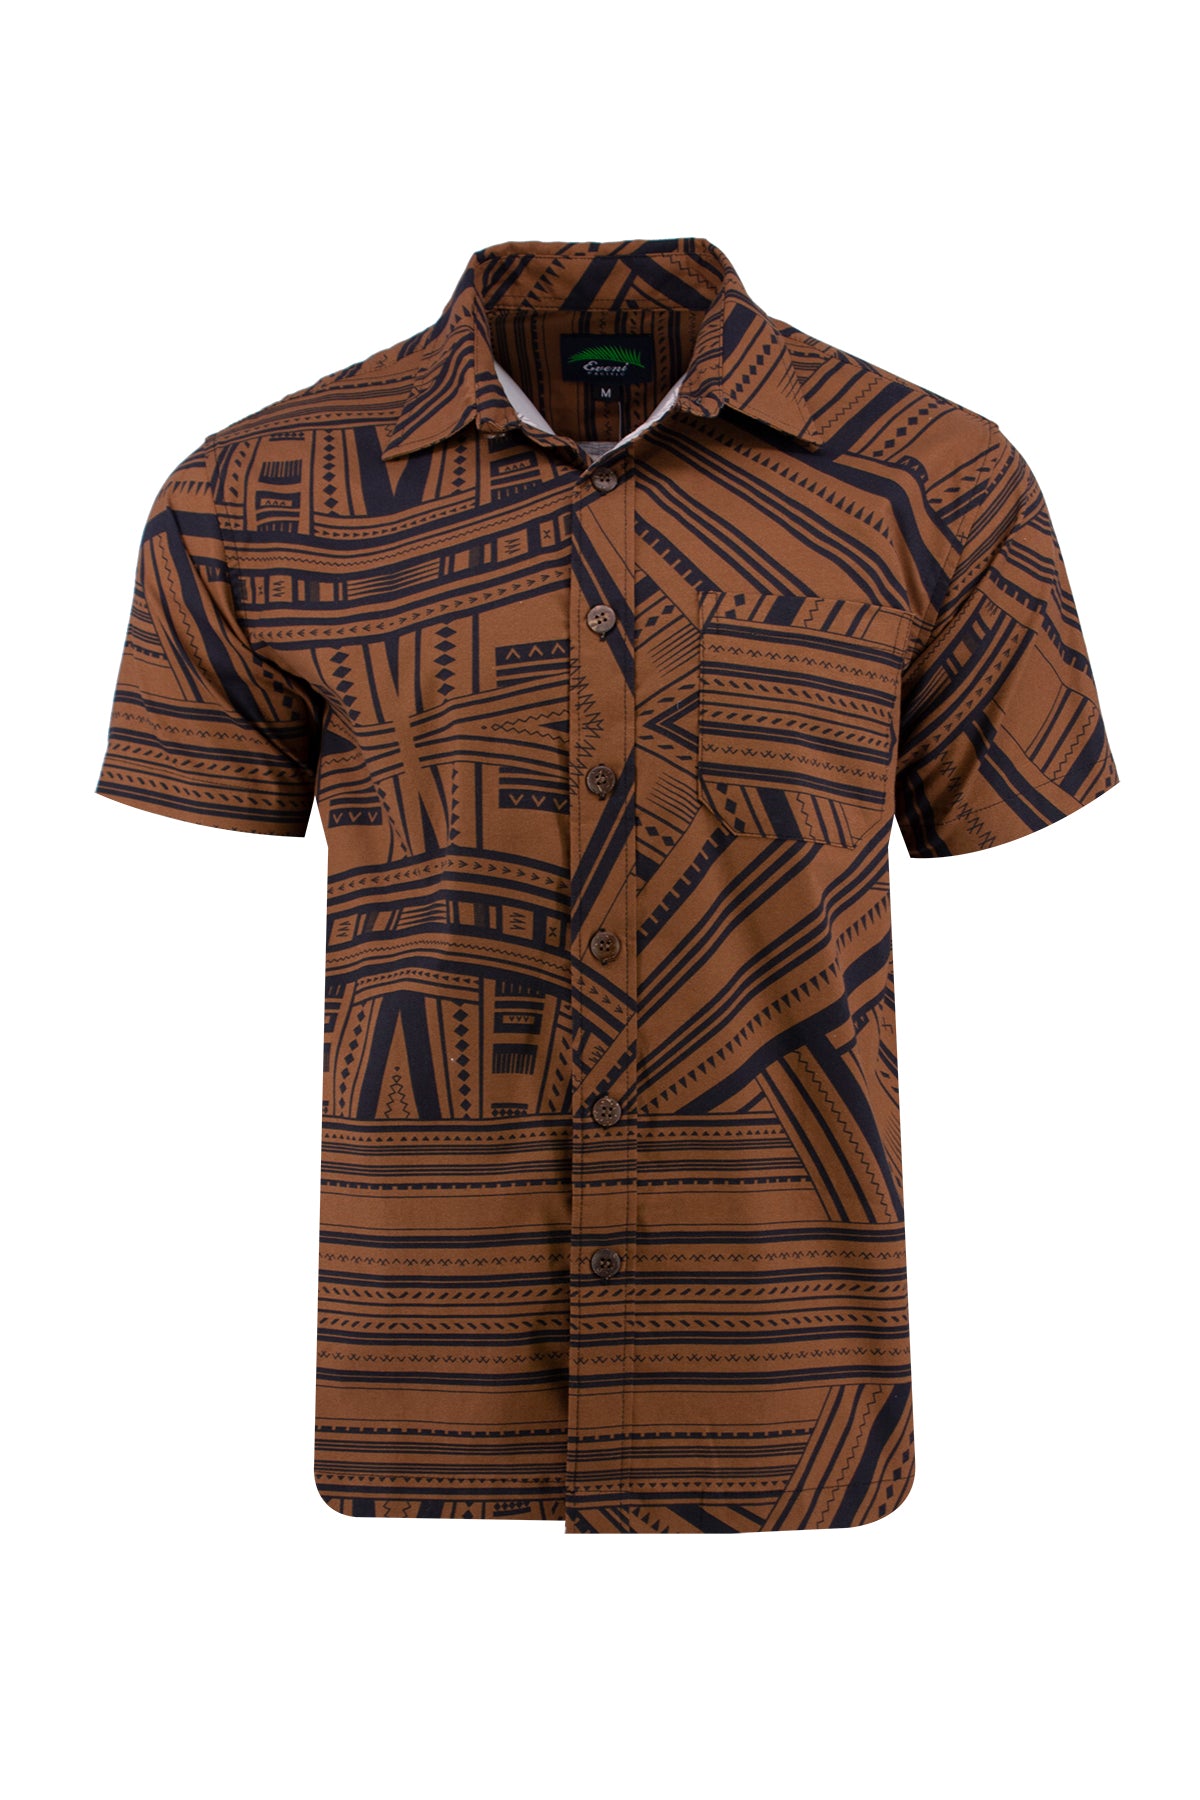 Eveni Pacific Men's Classic Shirt - NOMAD EARTH BROWN